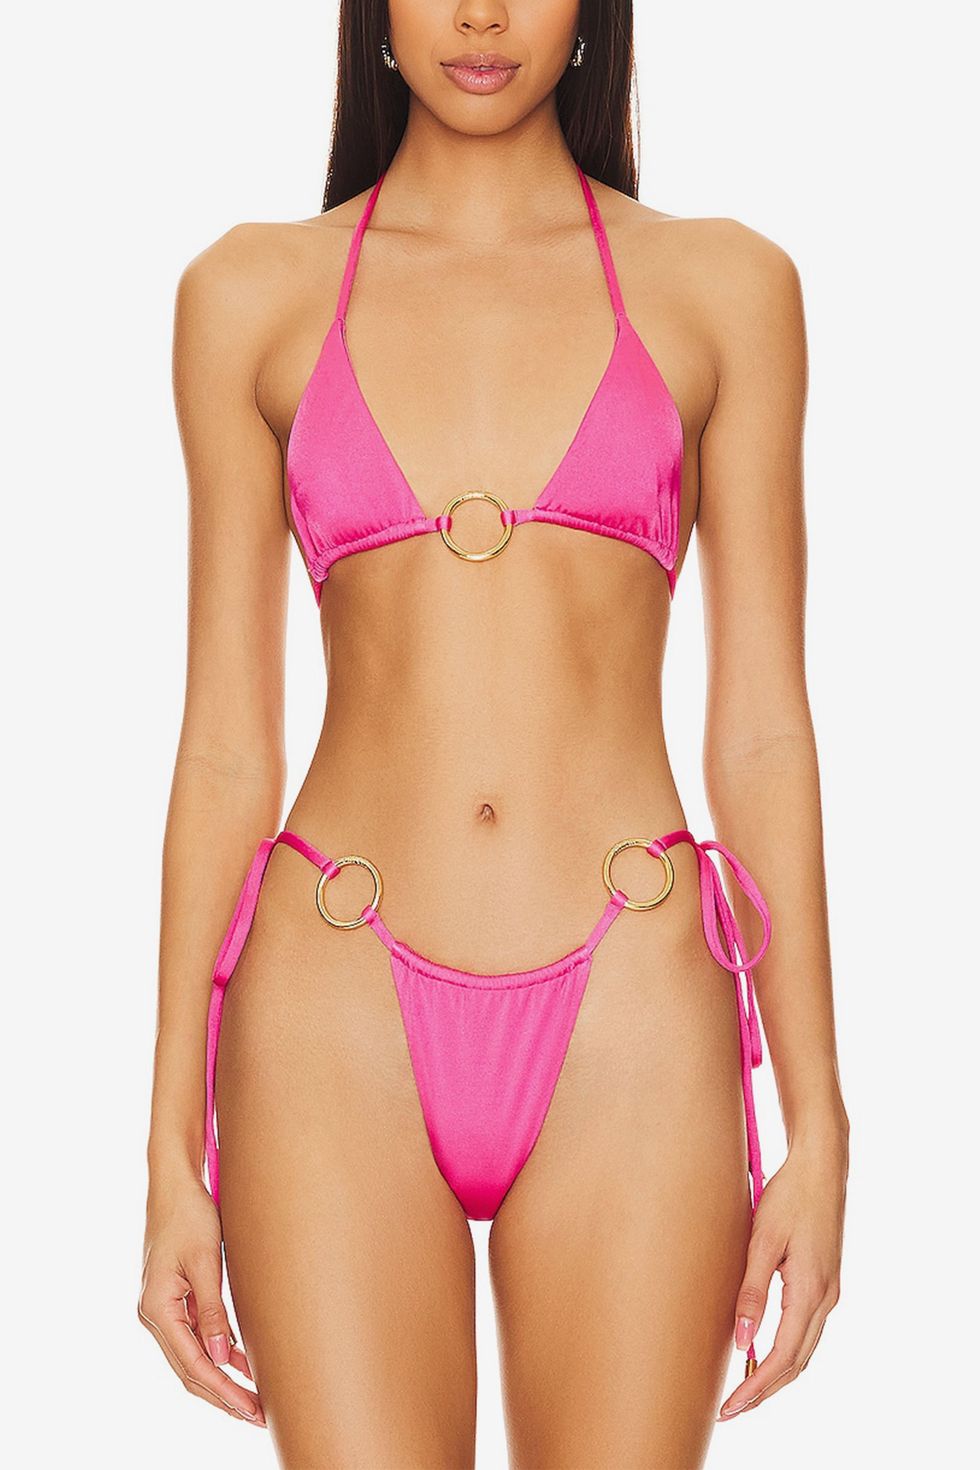 Sexy Bikini Swimsuit For Women Ribbed O-ring String Bikini Gift For Girls  Ladies Friend